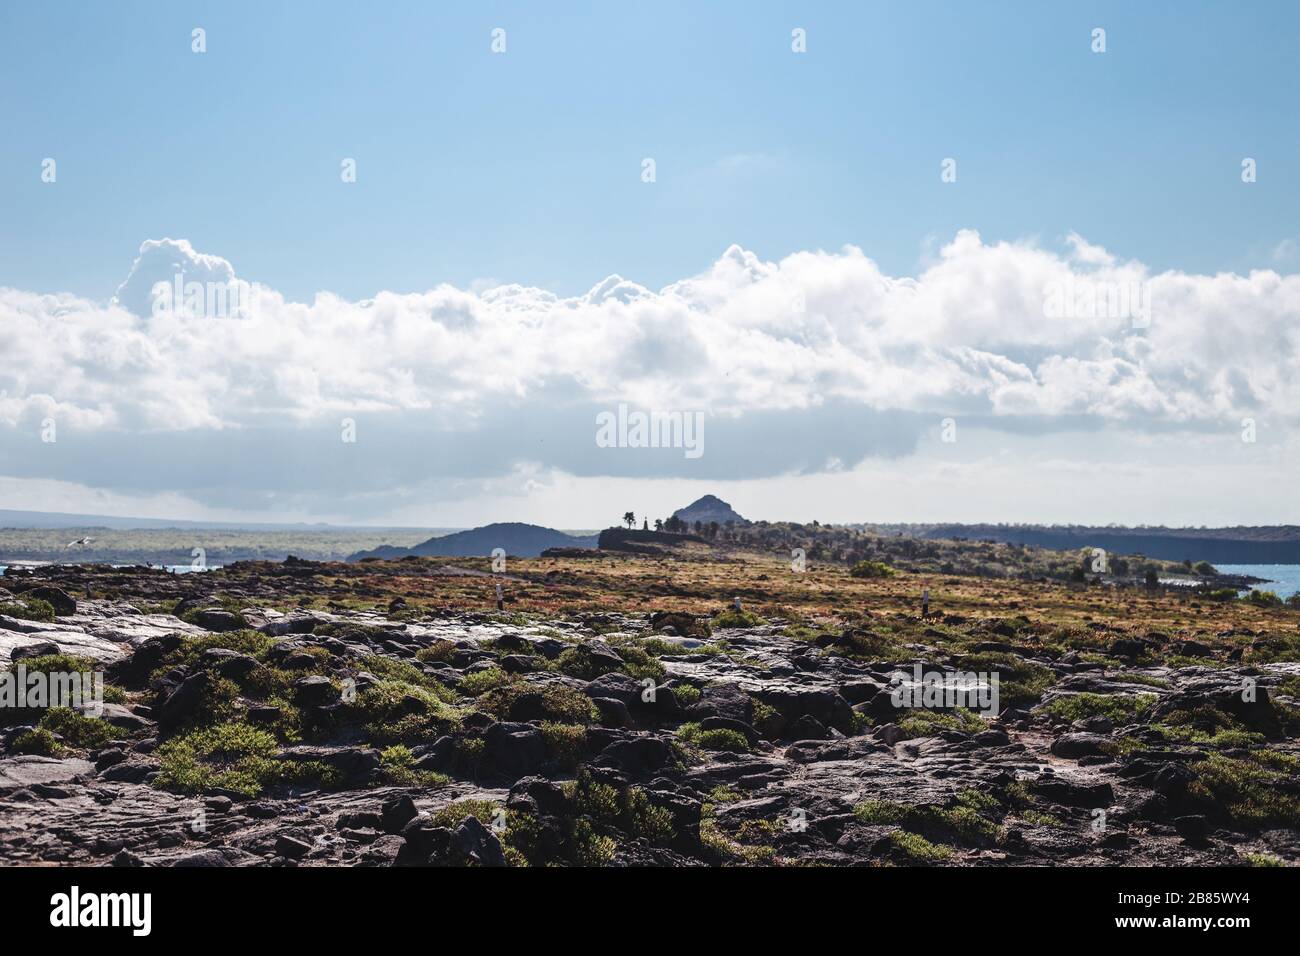 Jurassic-like wilderness landscape of Isla North Seymour in the Galapagos Islands, Ecuador Stock Photo